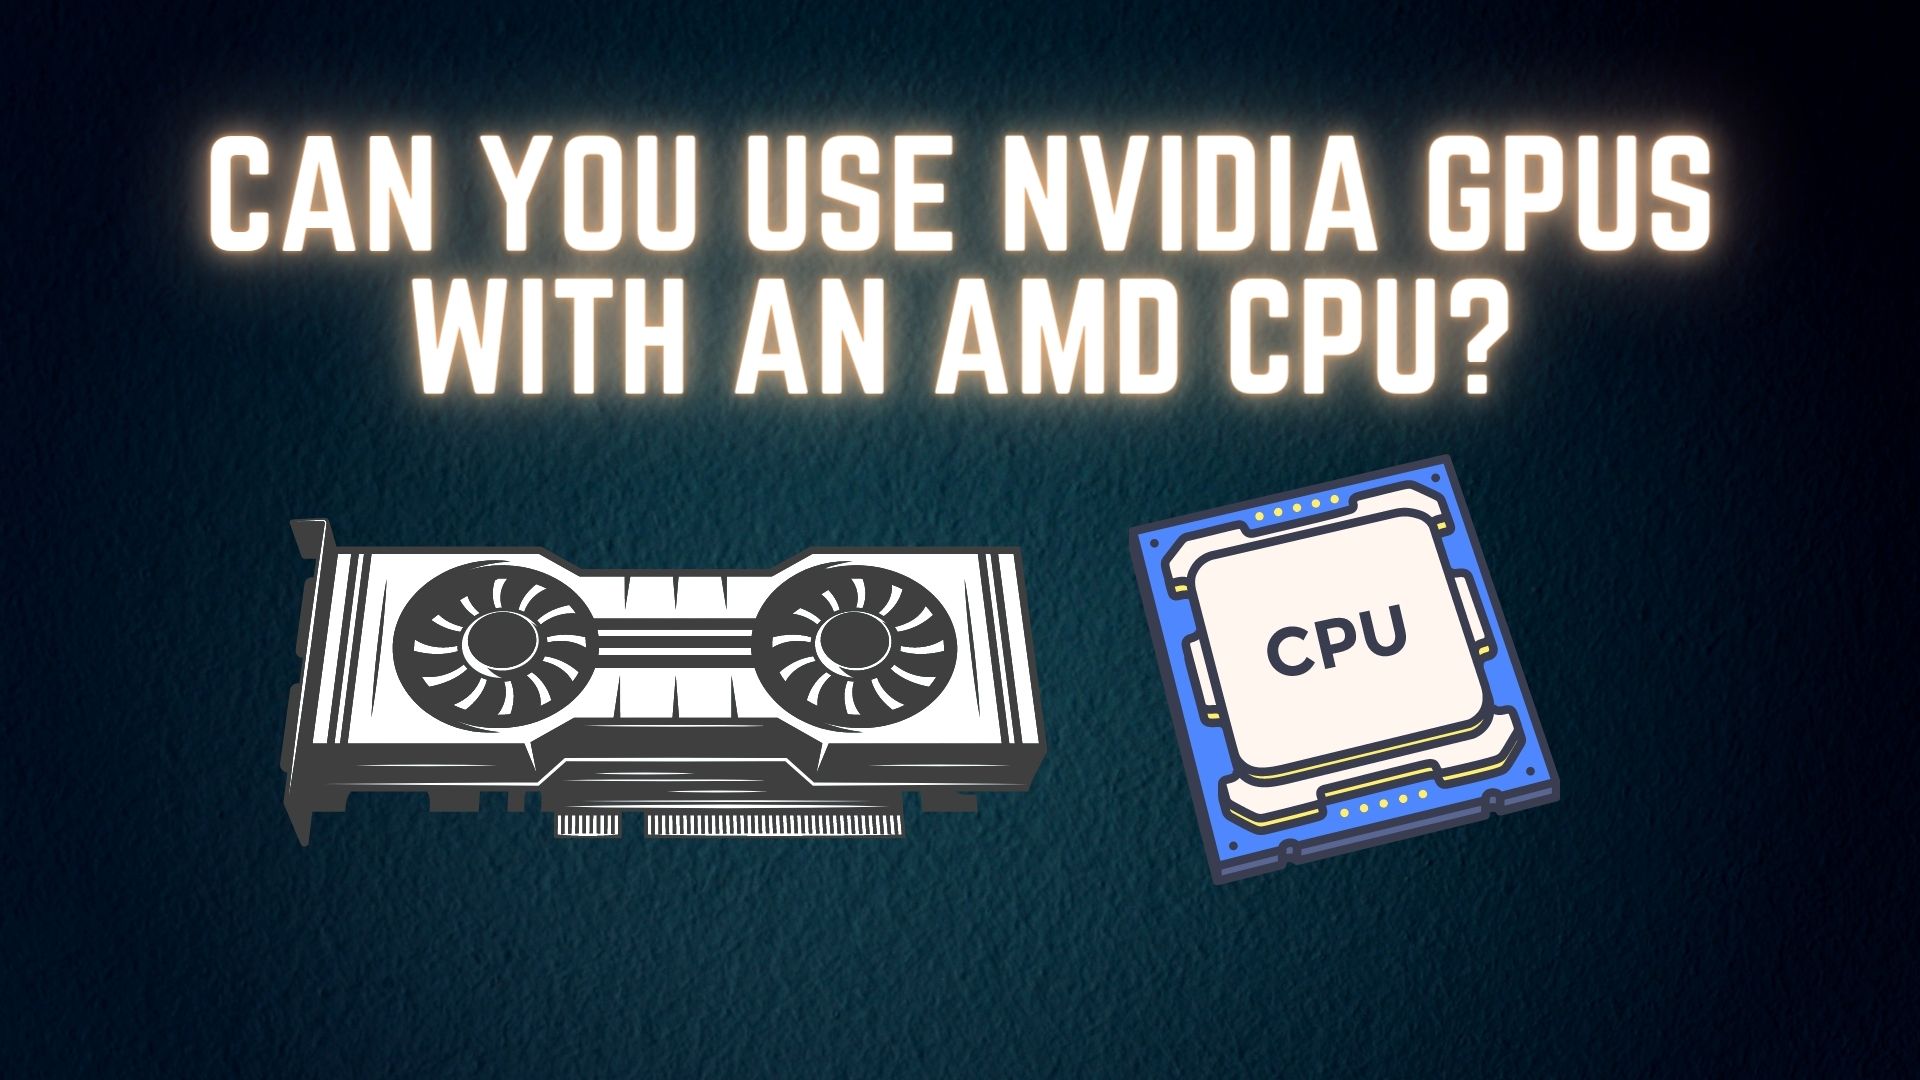 Nvidia GPUs with an AMD CPU